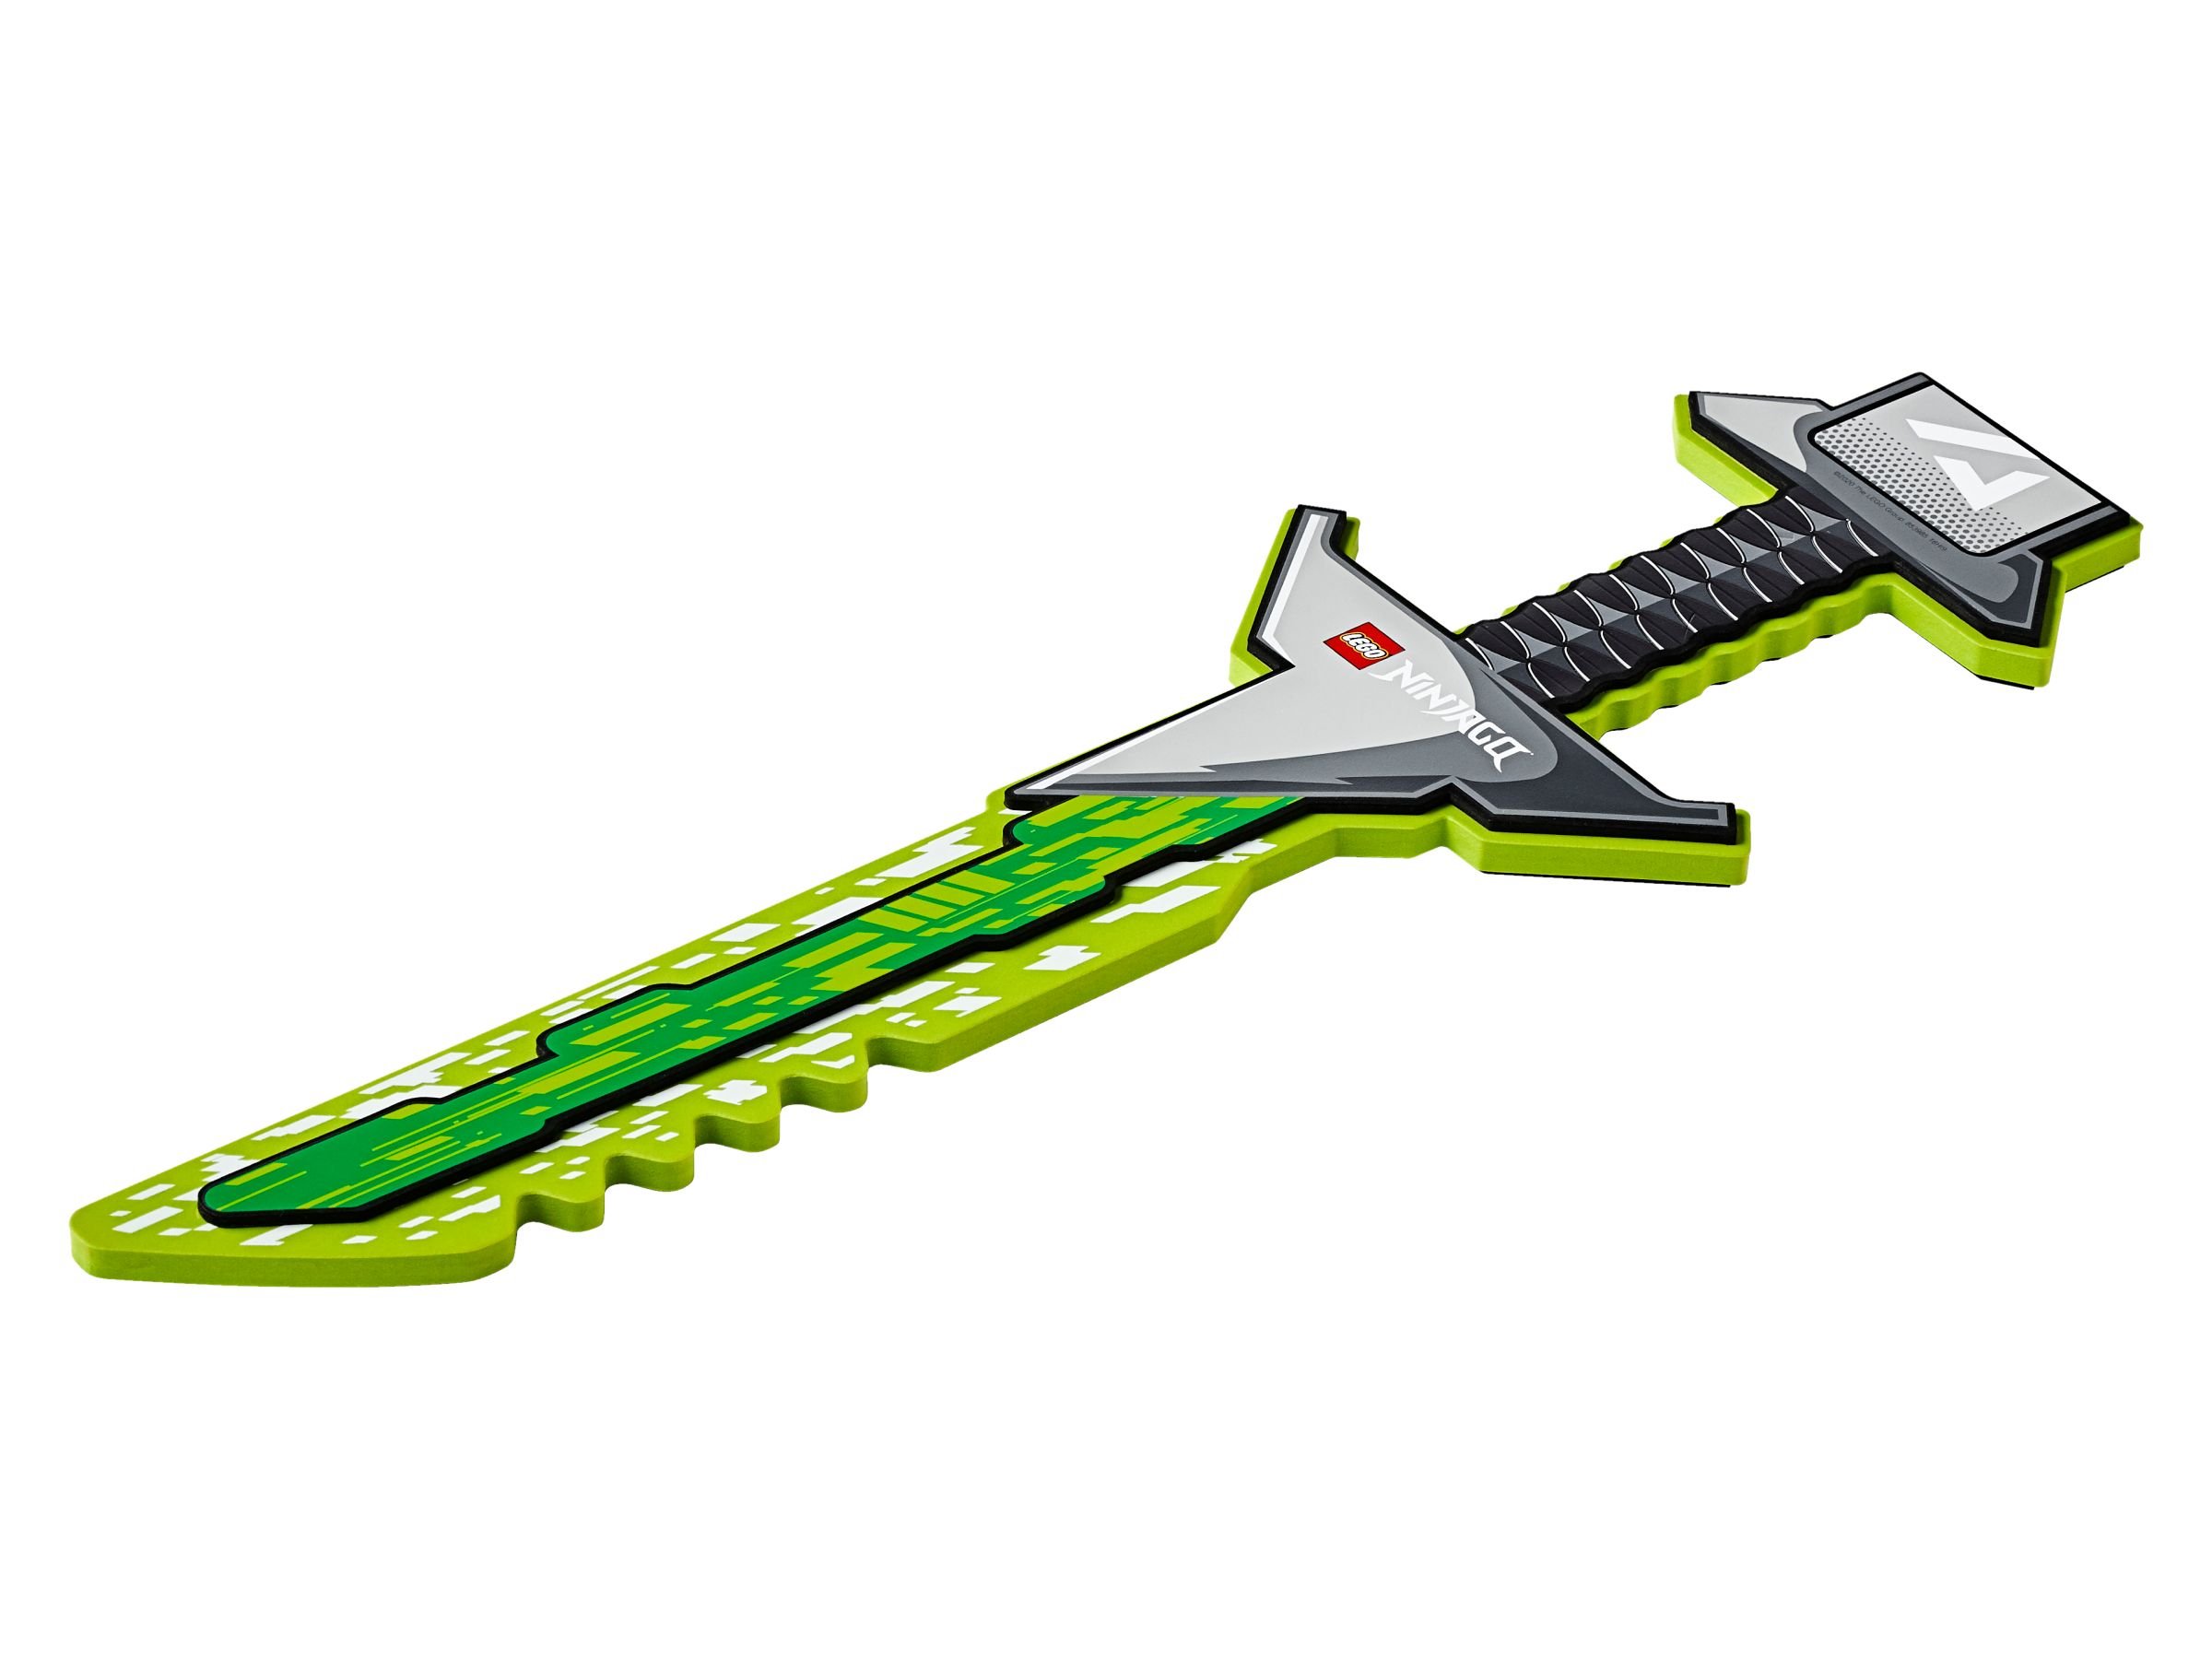 Ninjago Schwert Dolch Säbel Katana  21459 gelblich grün Lego 4 x Waffen neon 